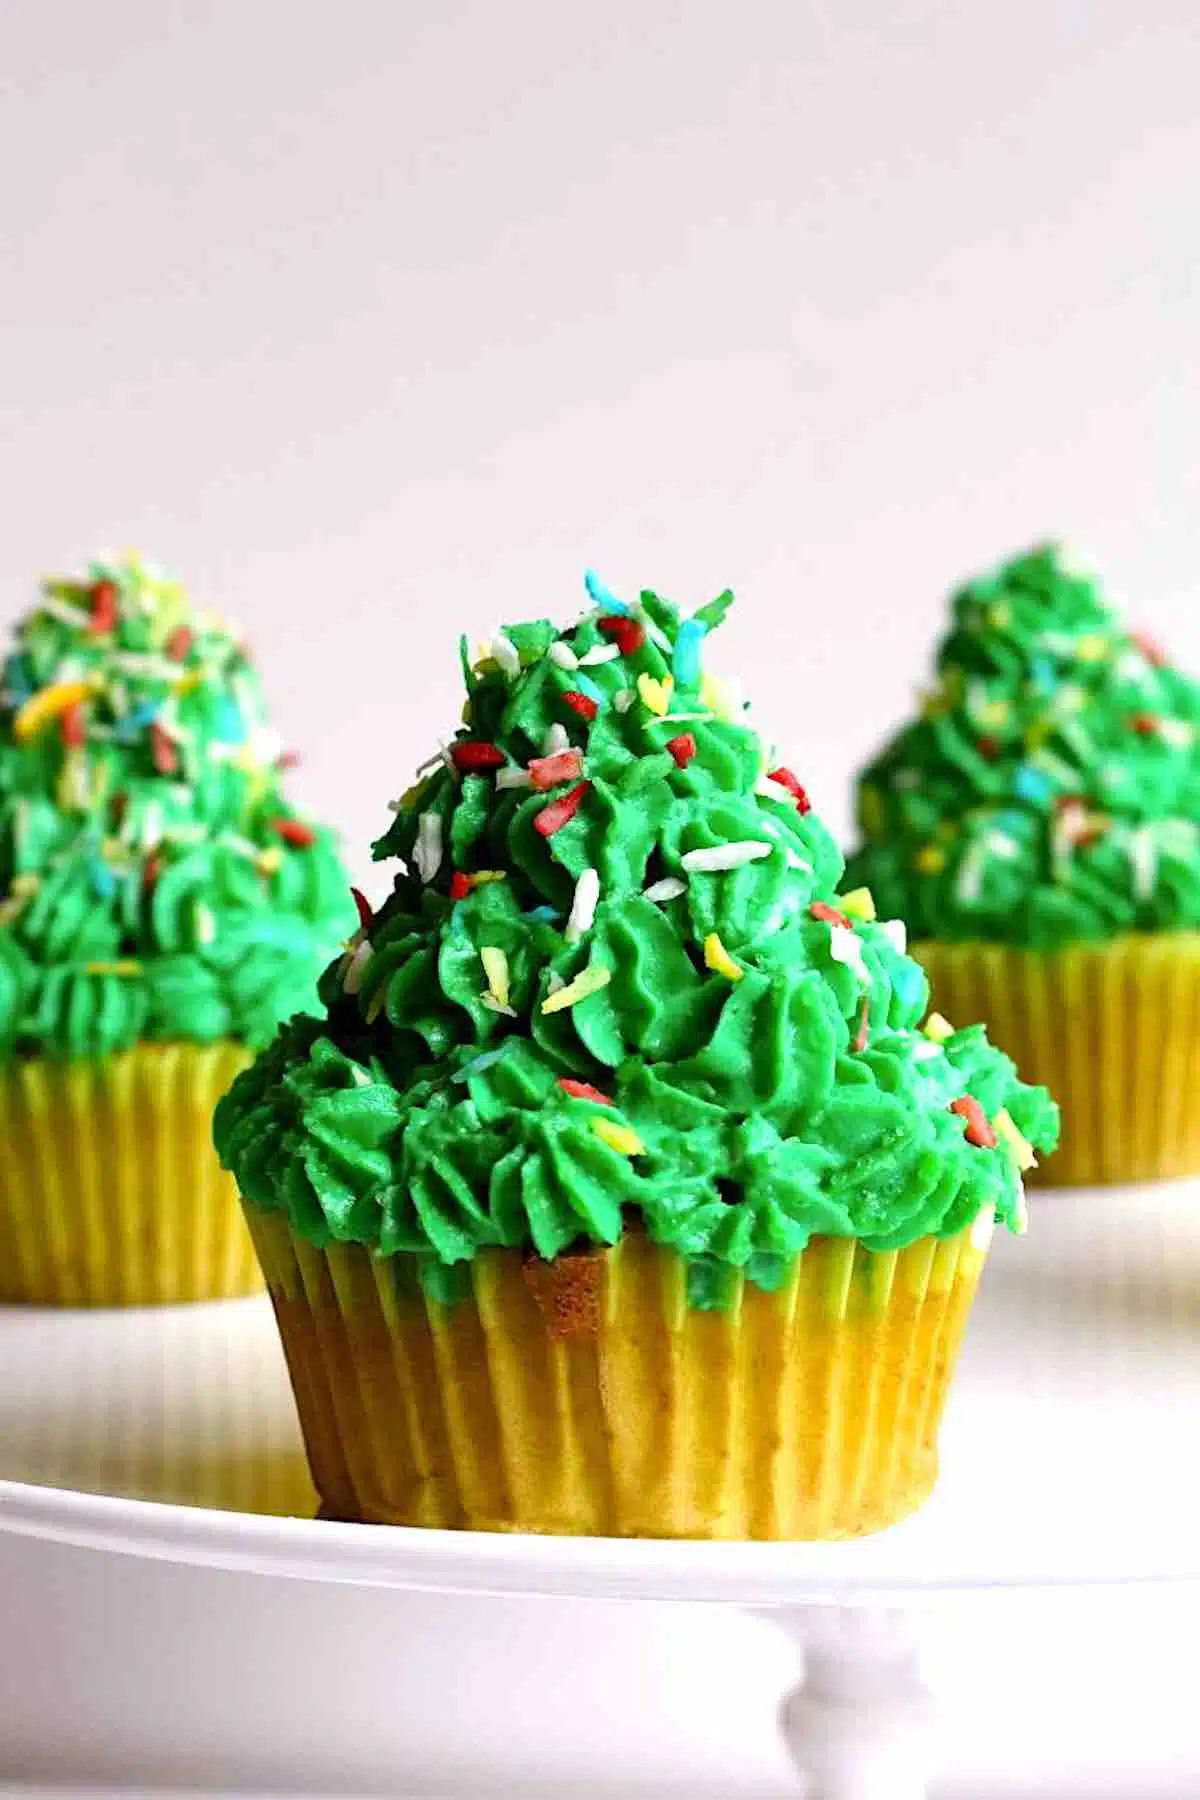 holidays cupcakes with tree design.